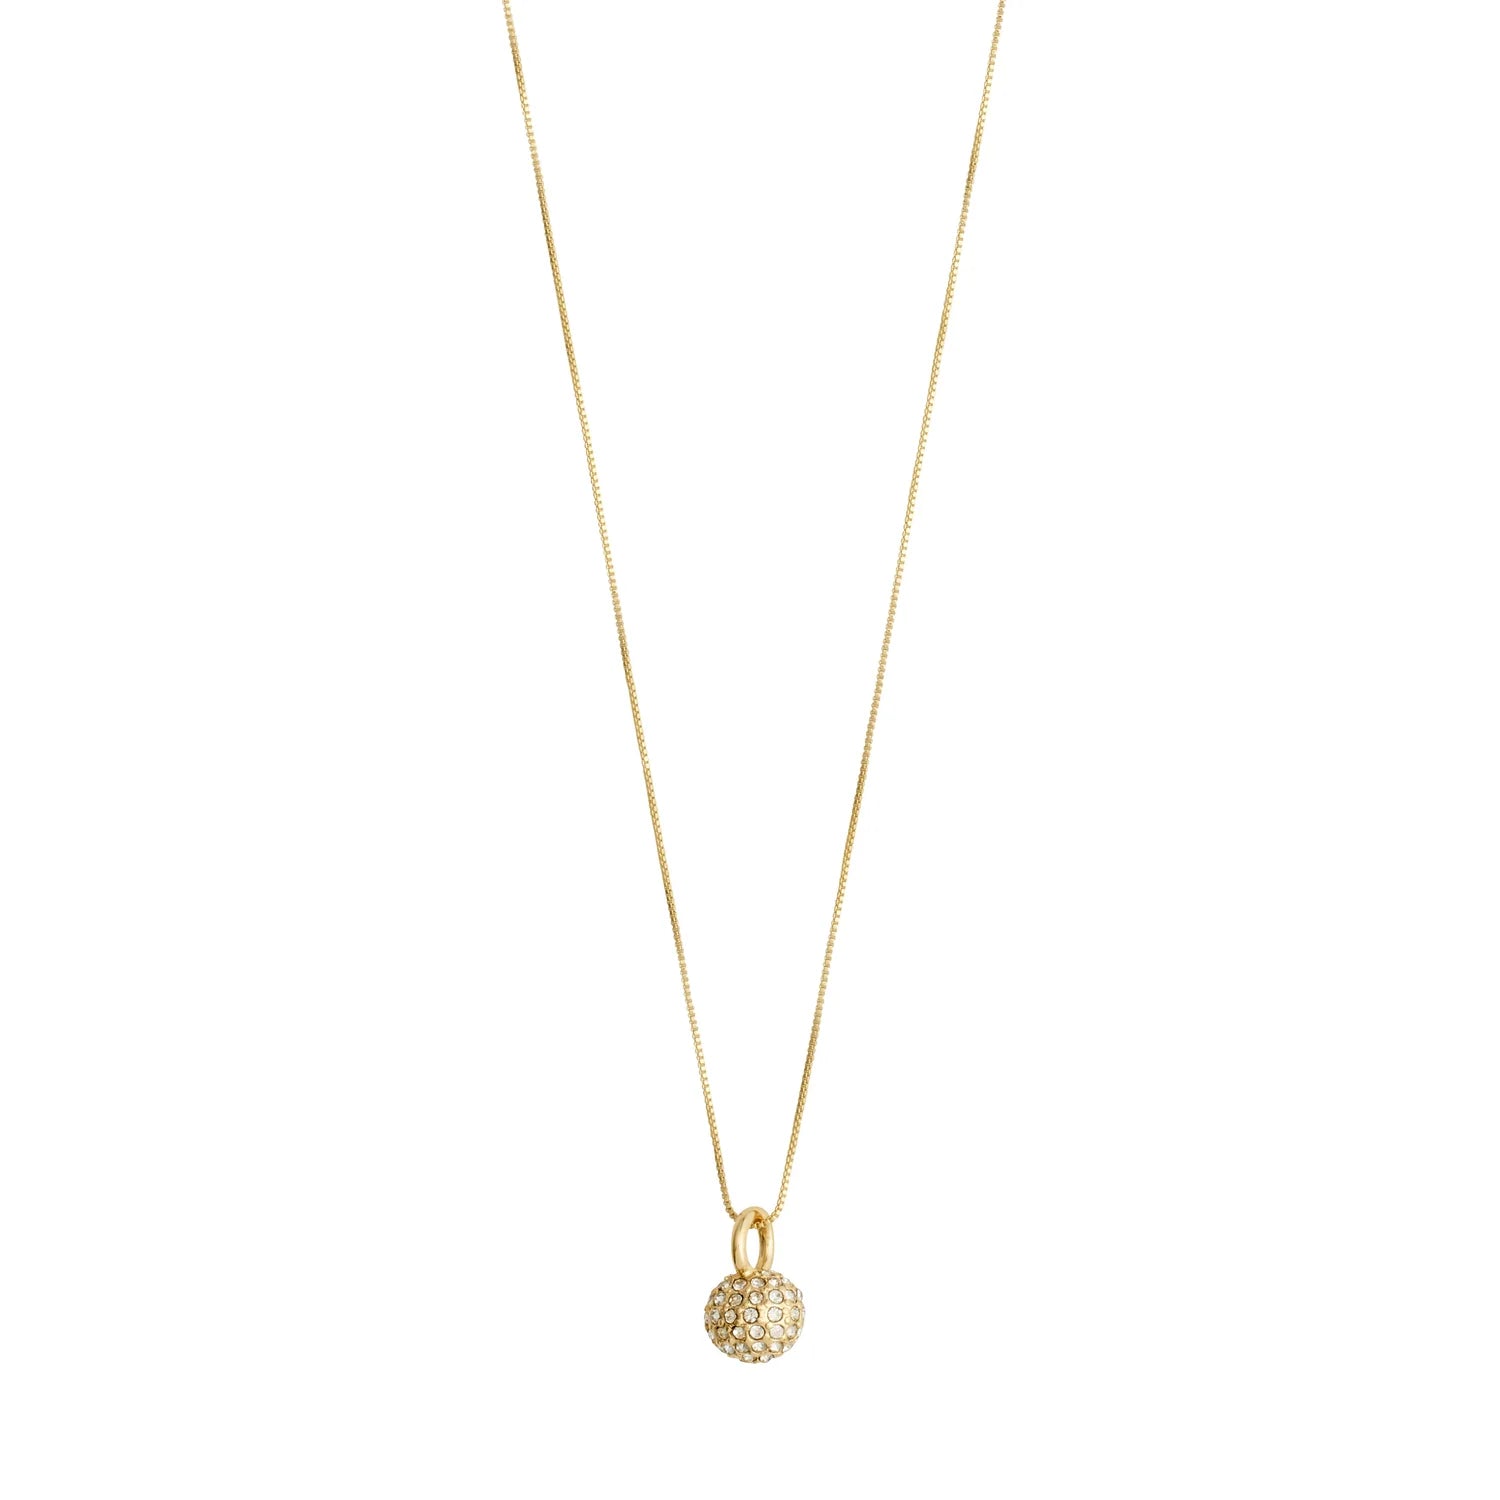 Edtli crystal pendant necklace gold-plated - Pilgrim Jewellery